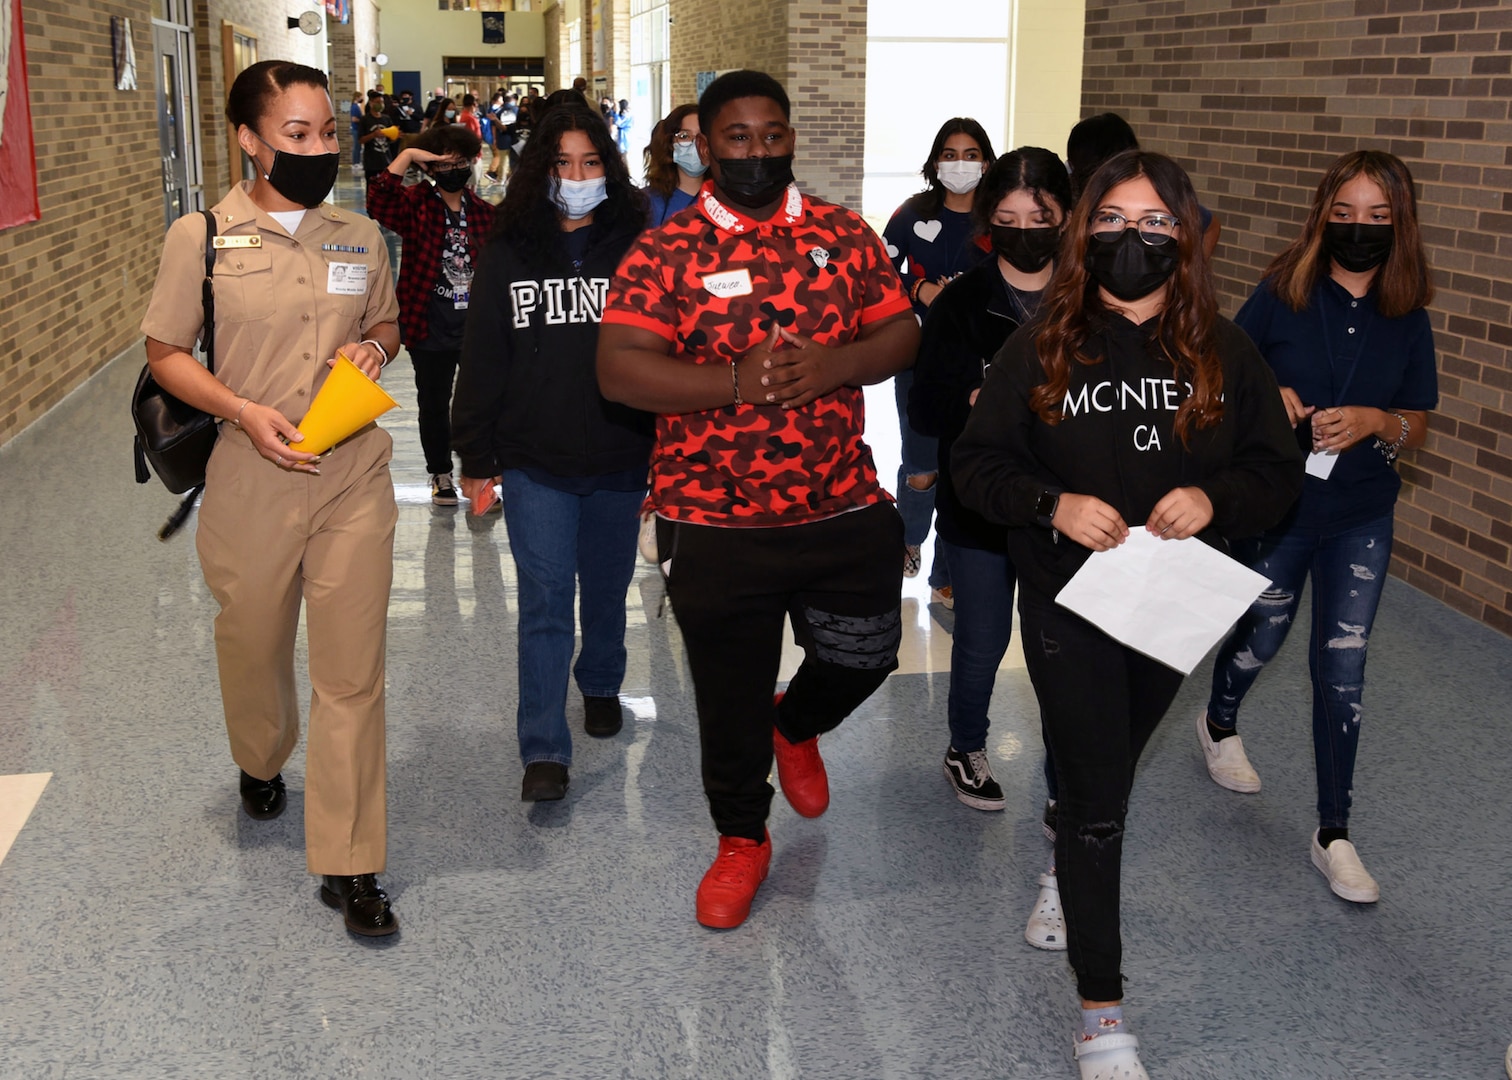 U.S. Navy nurse walking with students, talking to them.